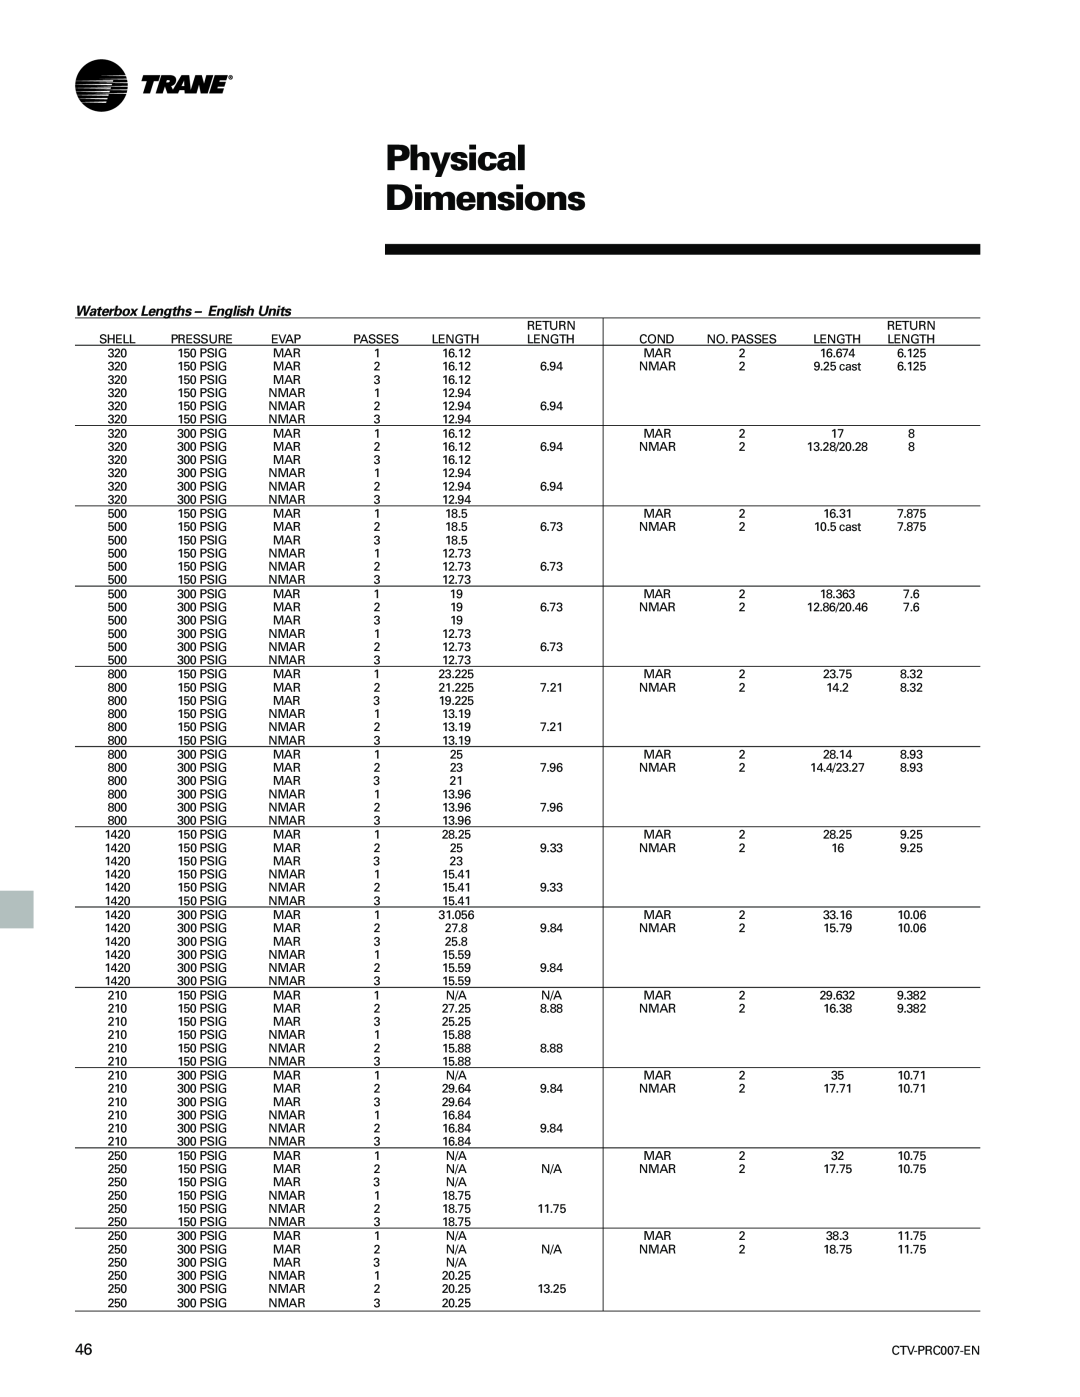 Trane ctv-prc007-en manual Physical Dimensions, Waterbox Lengths - English Units 